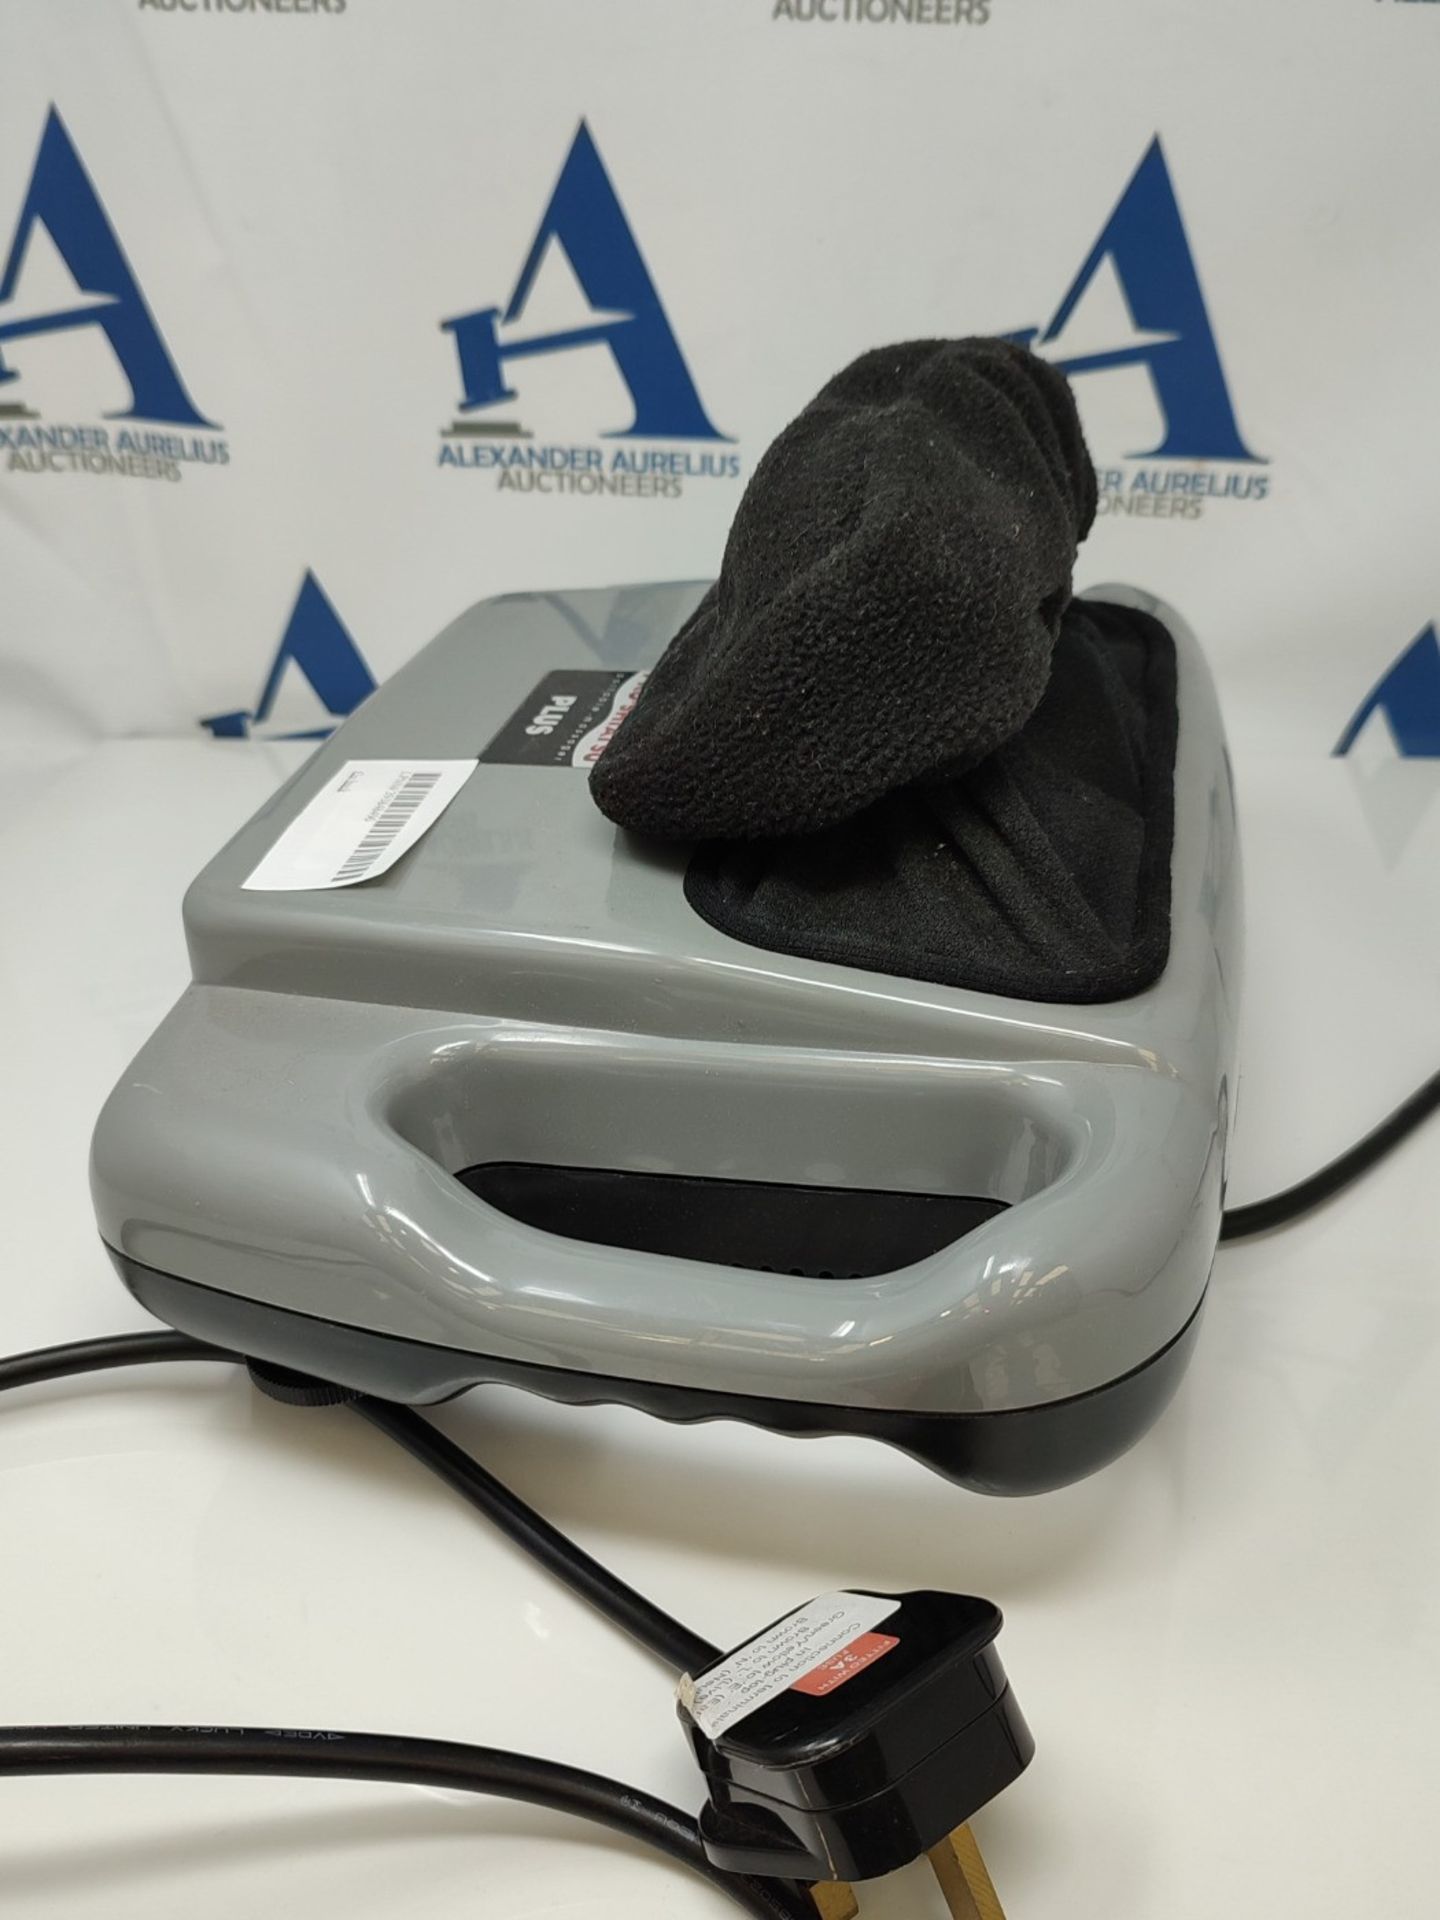 RRP £75.00 Pro shiatsu portable massager plus adjustable speeds tension pressure arms - Image 2 of 2